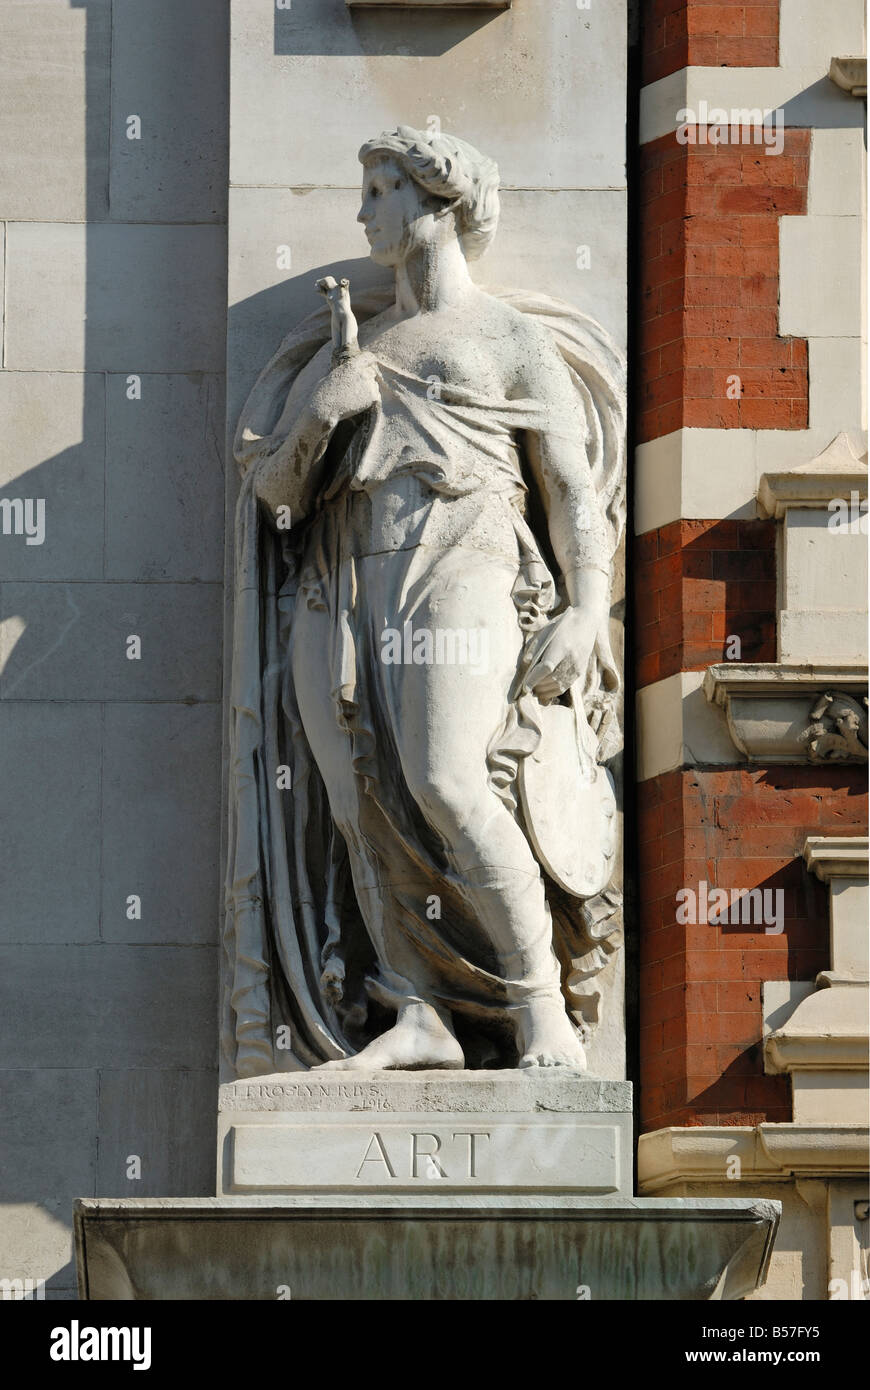 Statua di arte, New Bond Street, Londra Foto Stock